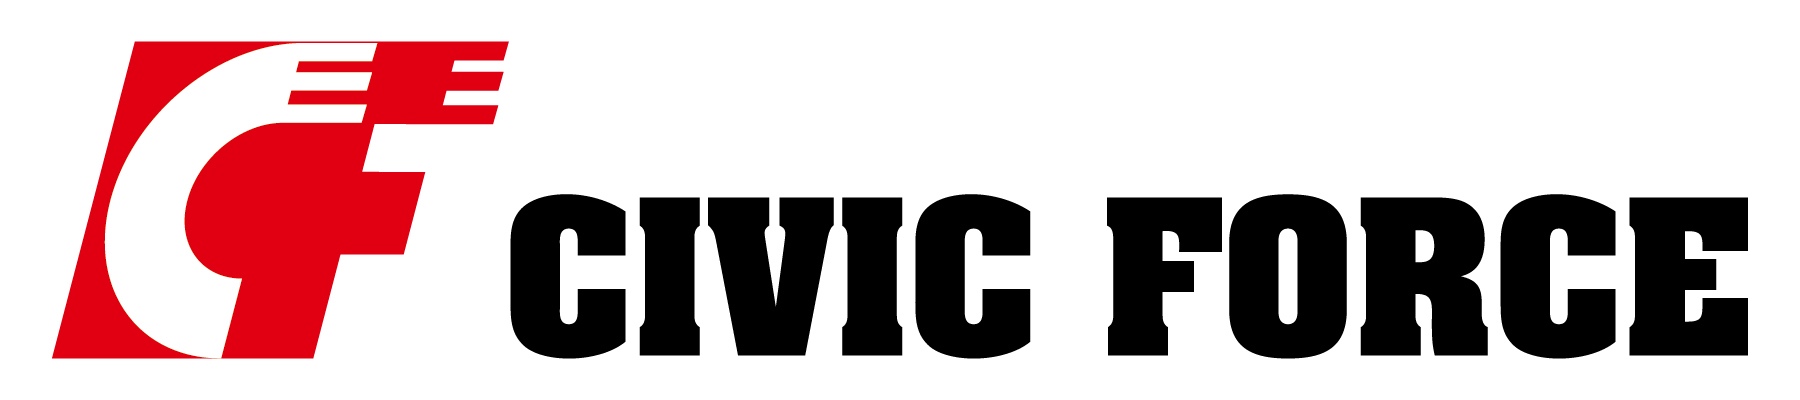 Civic-Forceロゴ.jpg